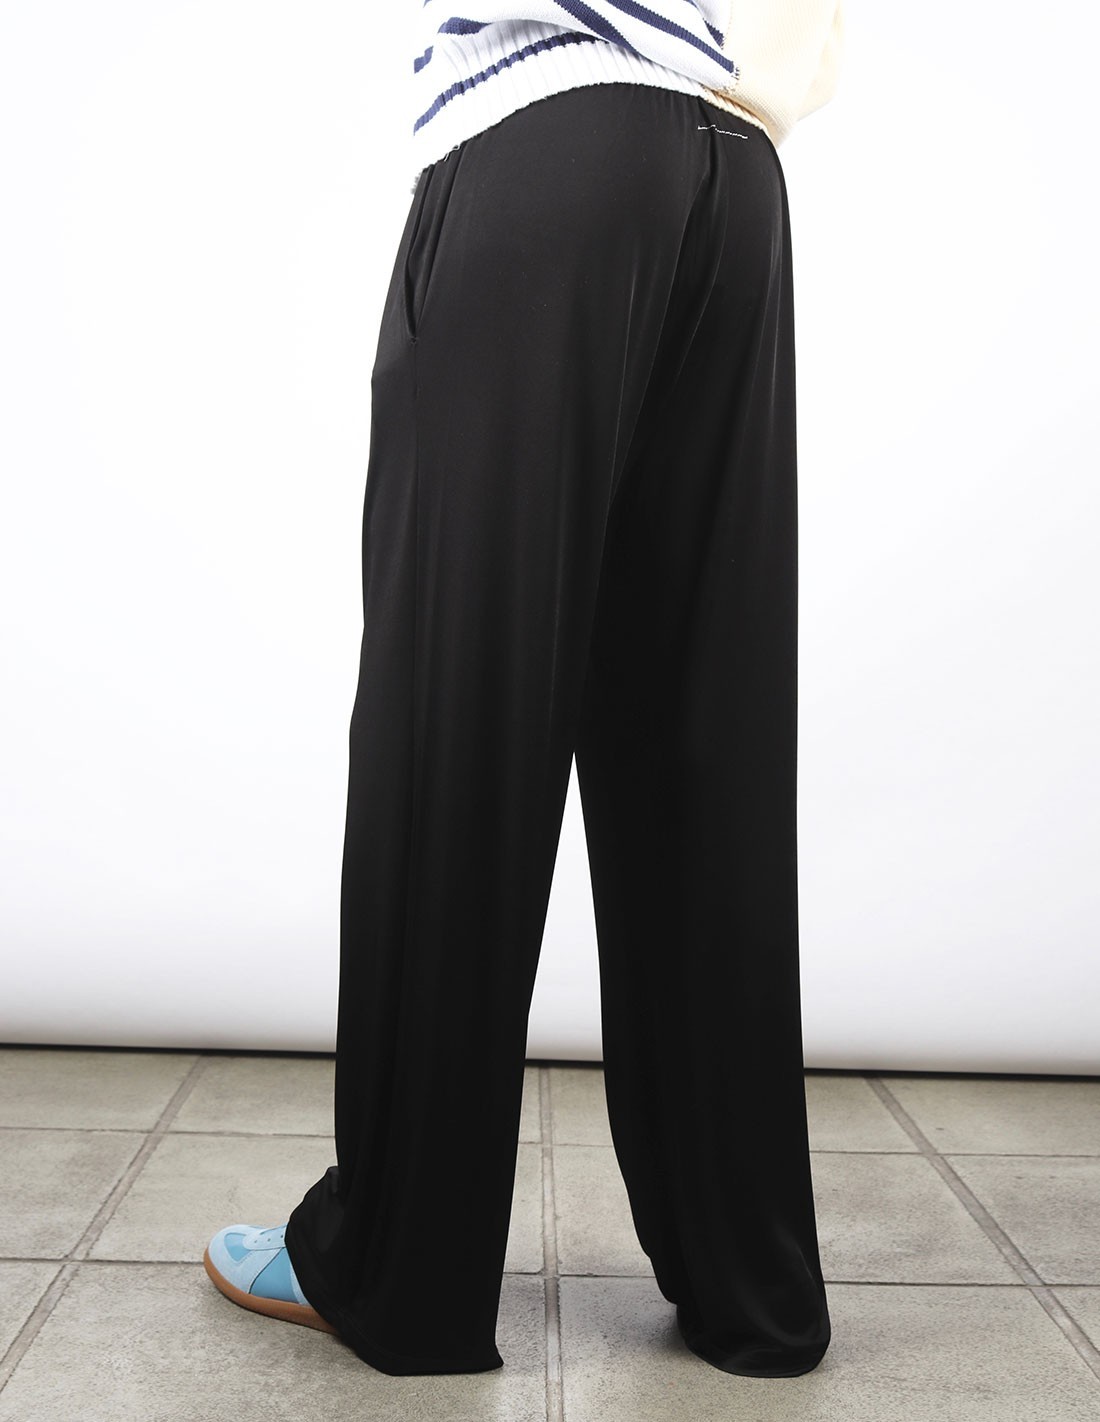 MM6 flowing black wide leg jogging pants